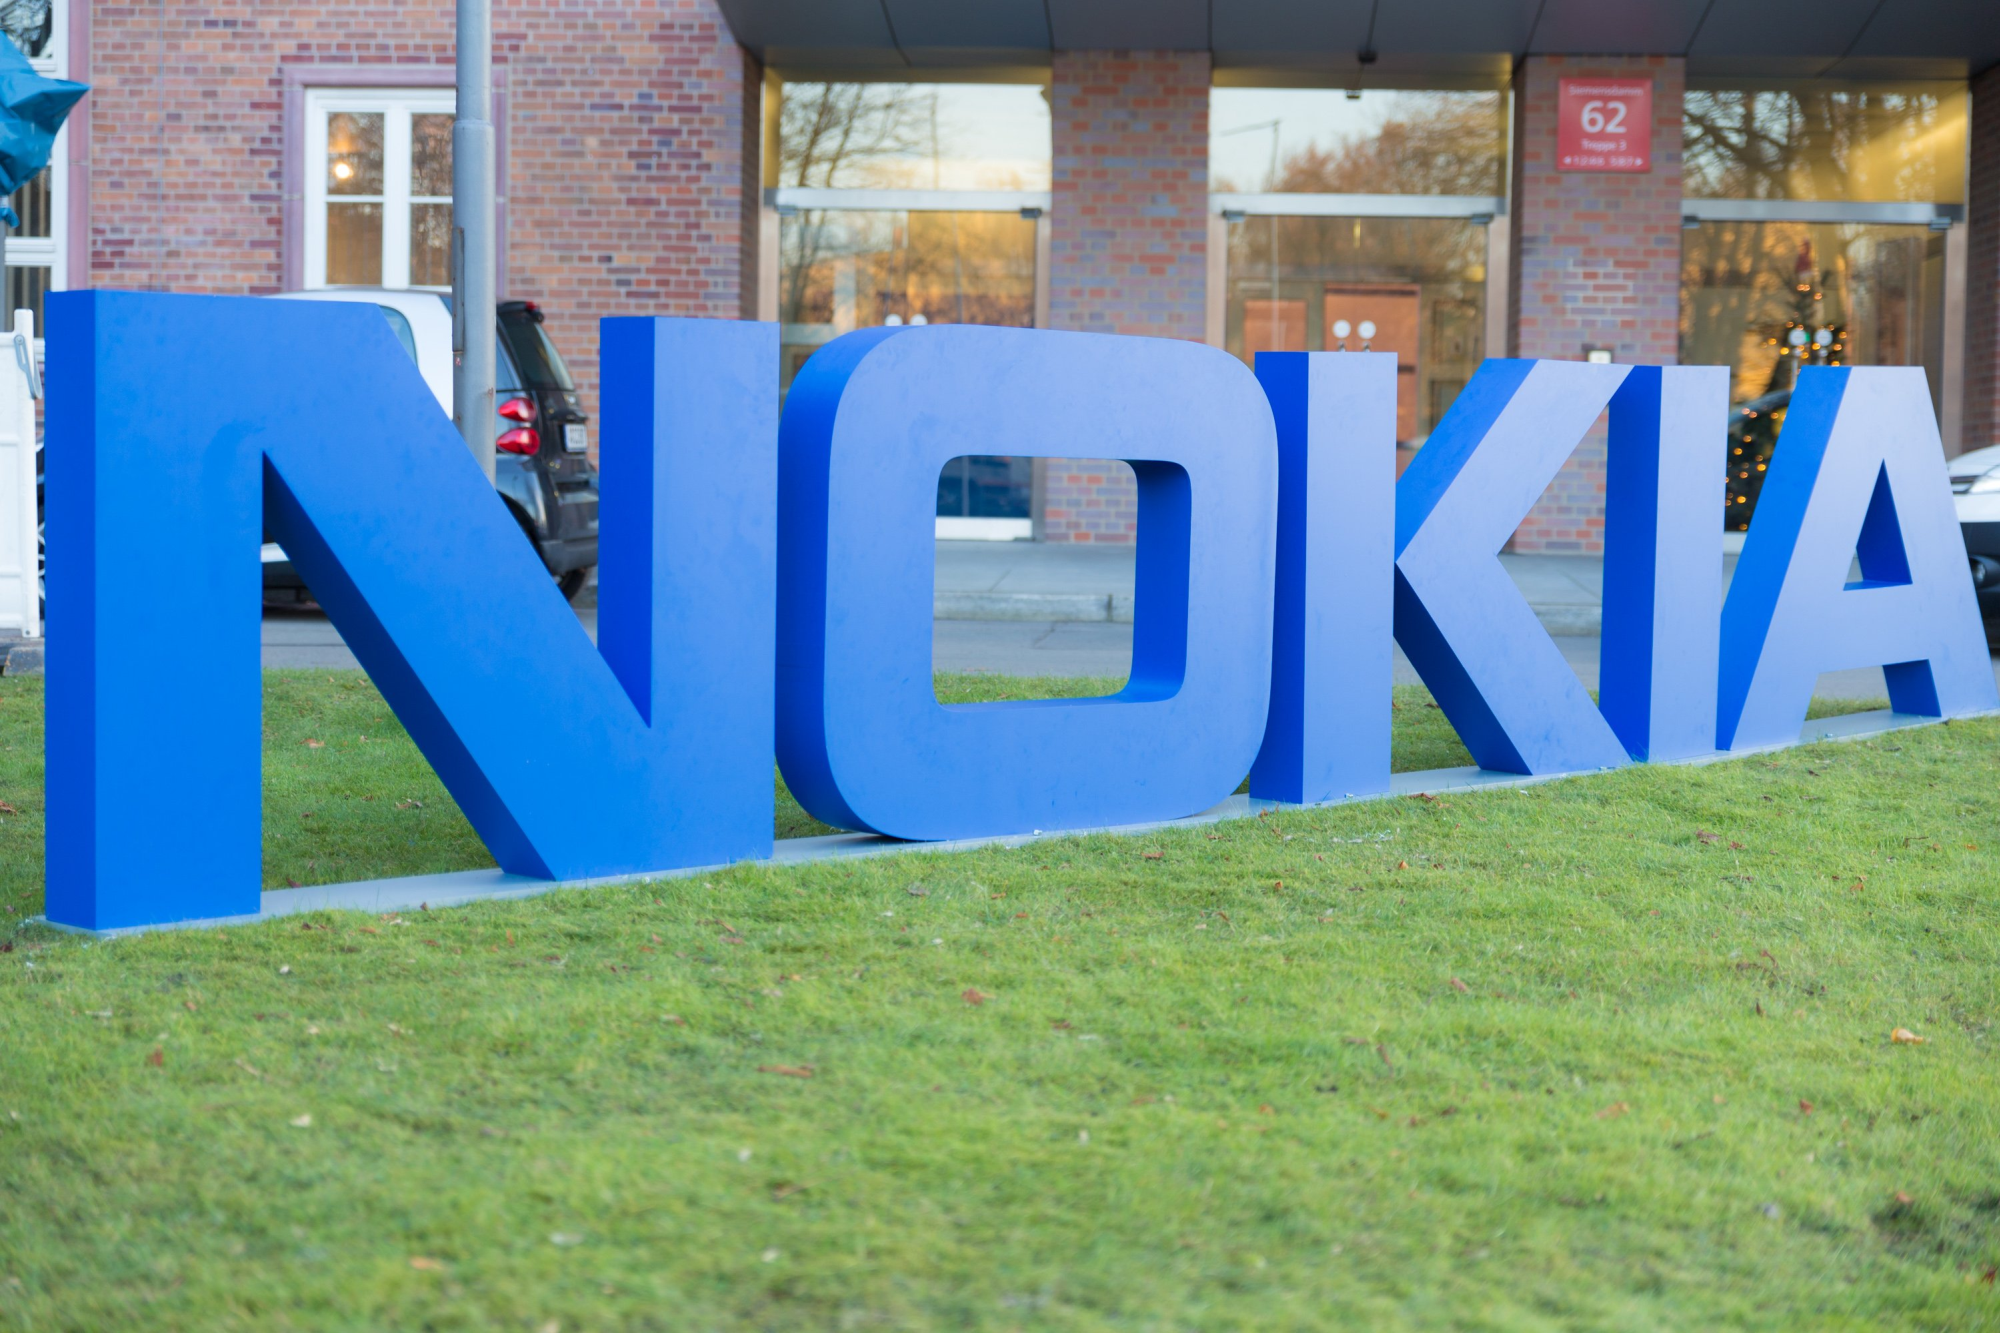 Nokia 3, Nokia 5, Nokia 6, Nokia 8 confirmed for Android Pie update title